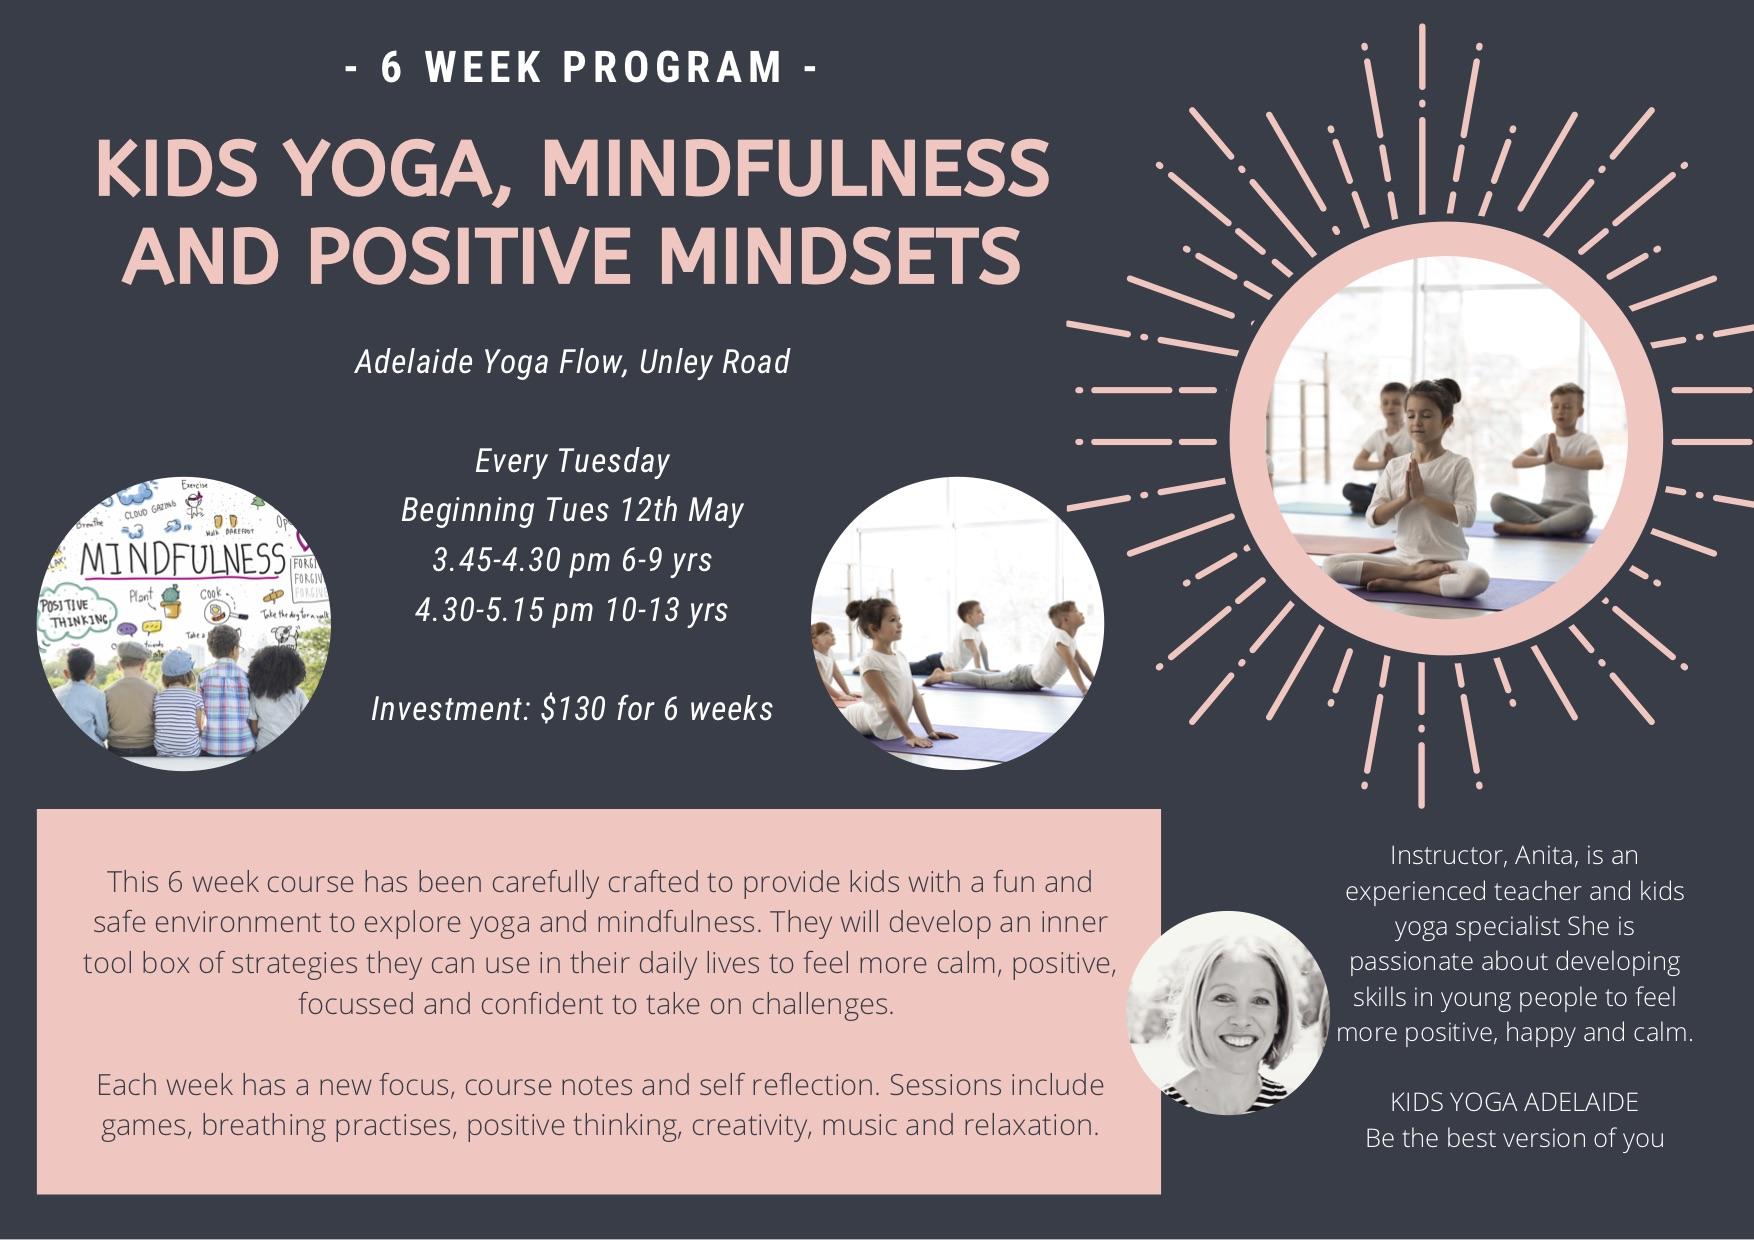 Kids Yoga and Mindfulness - 6 week program (10-13 yrs)